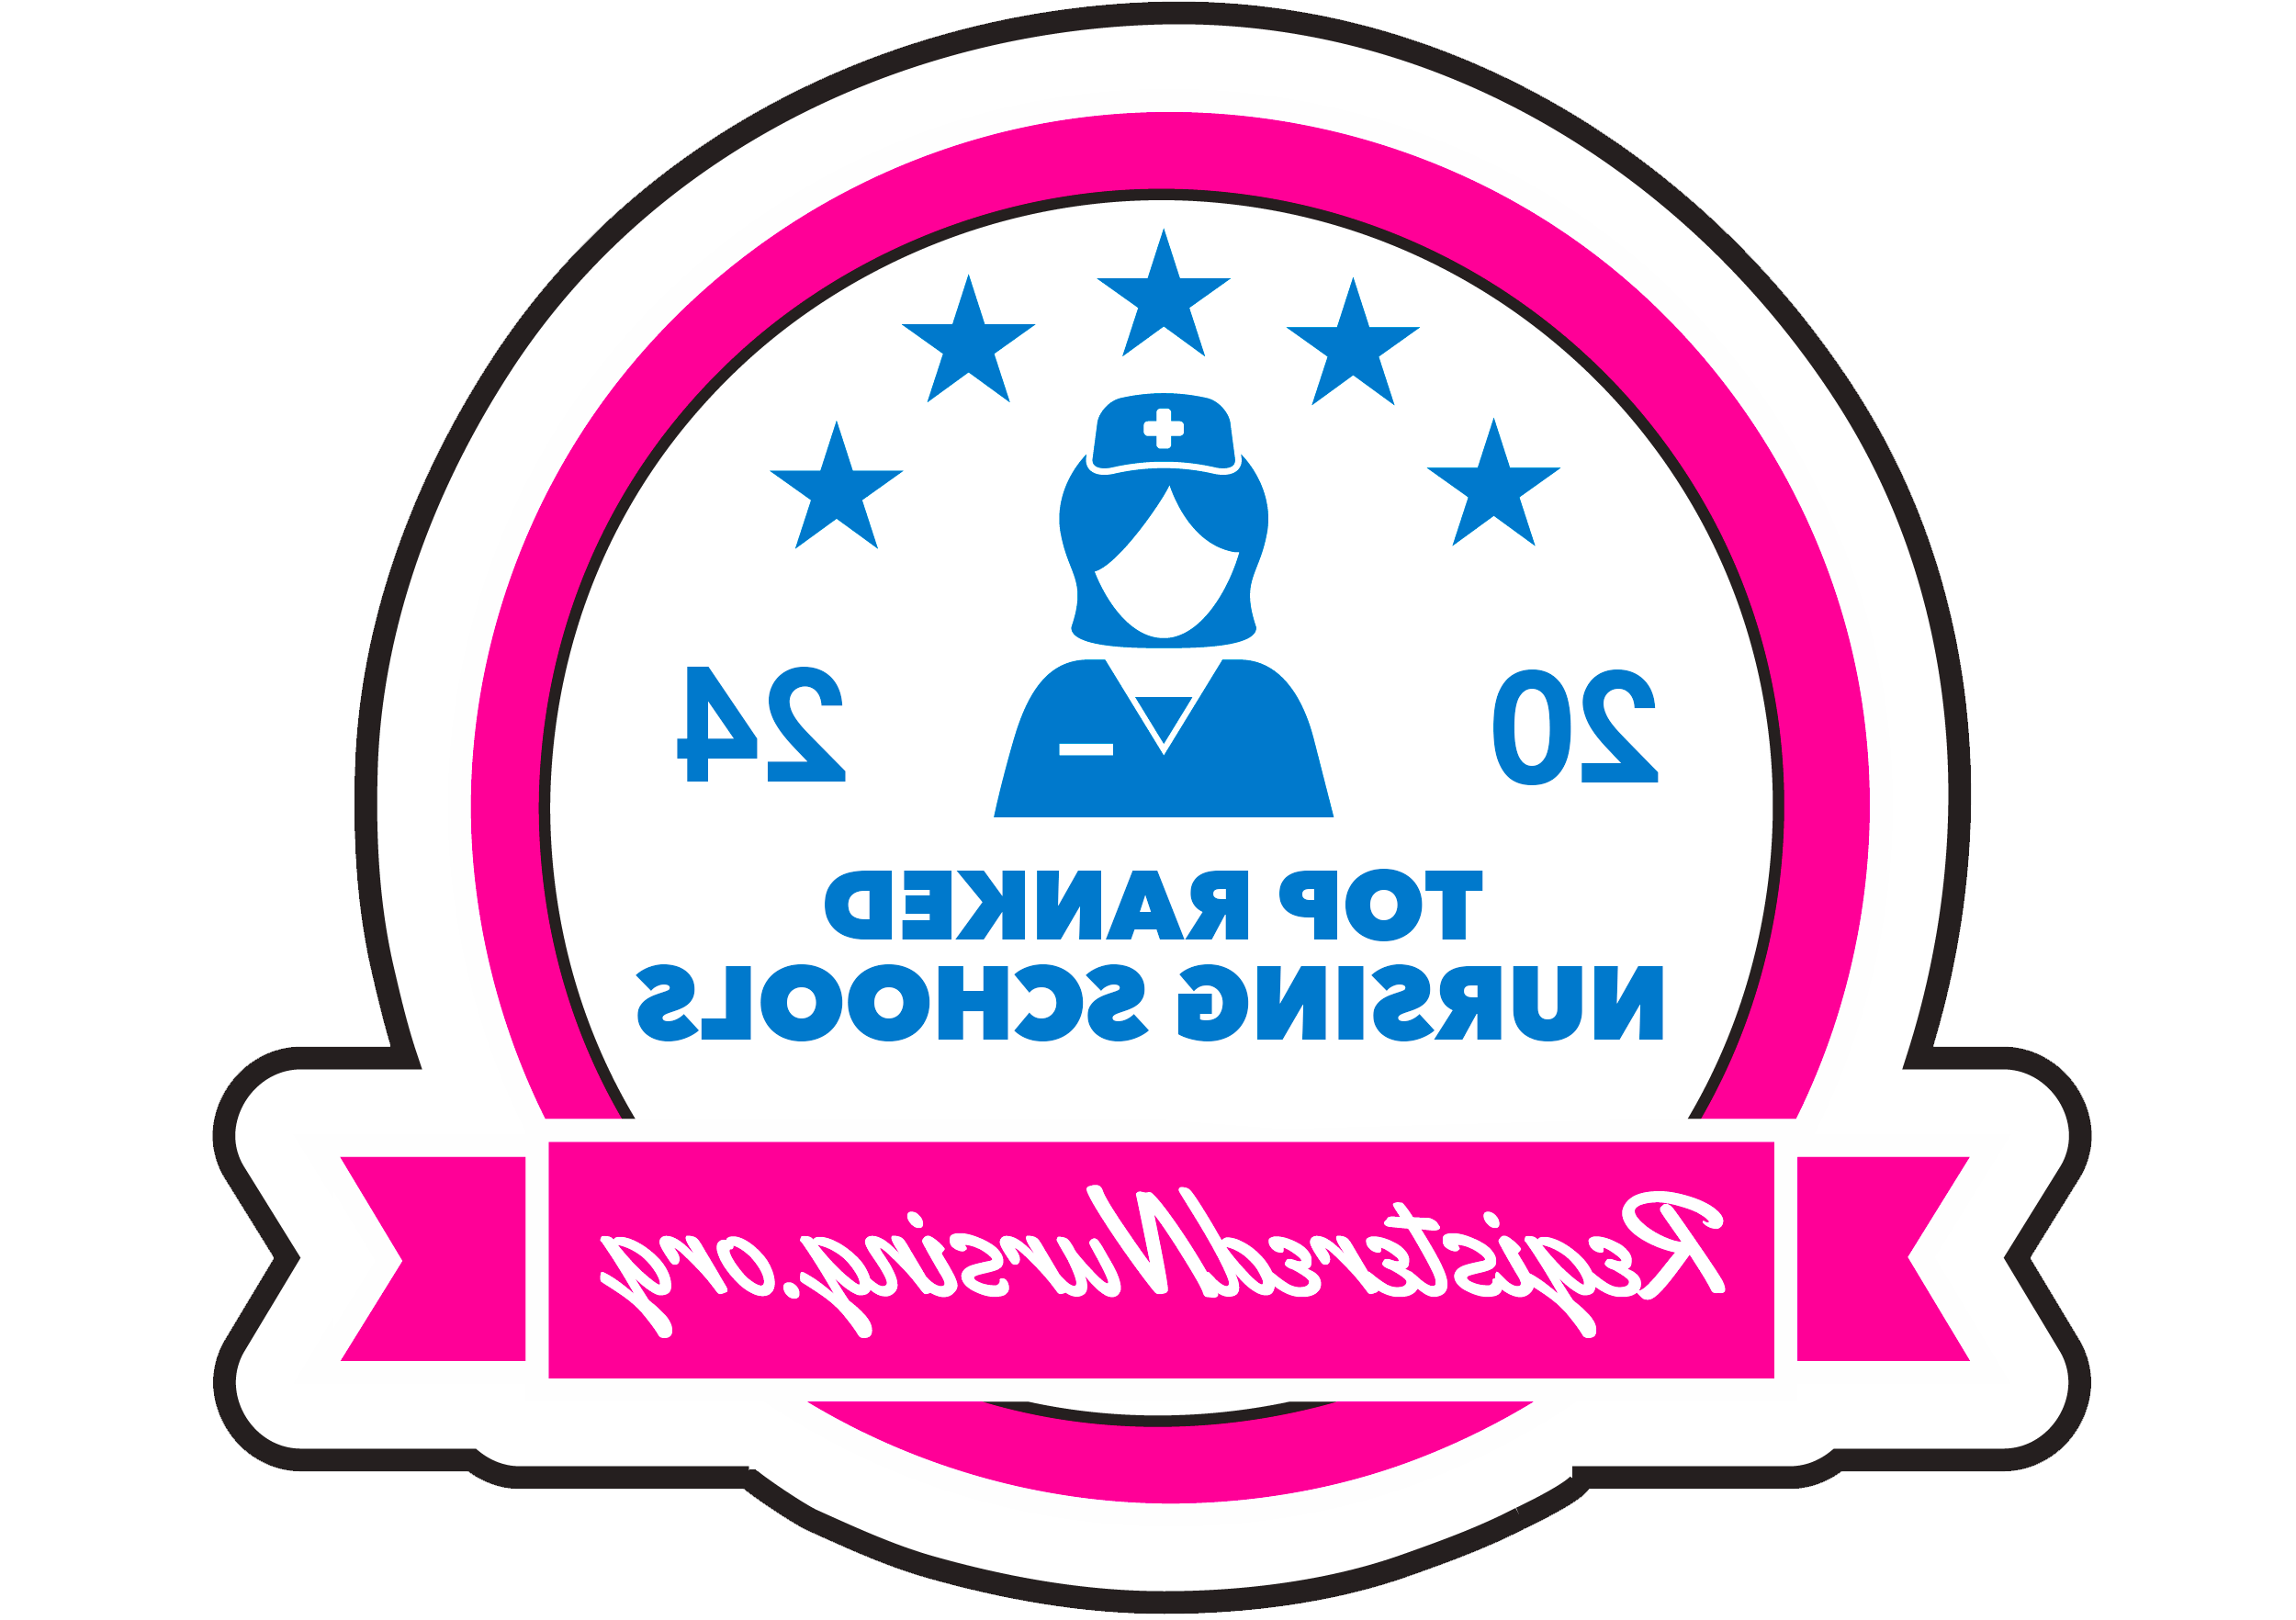 badge for top ranking nursing school at registerednursing.org